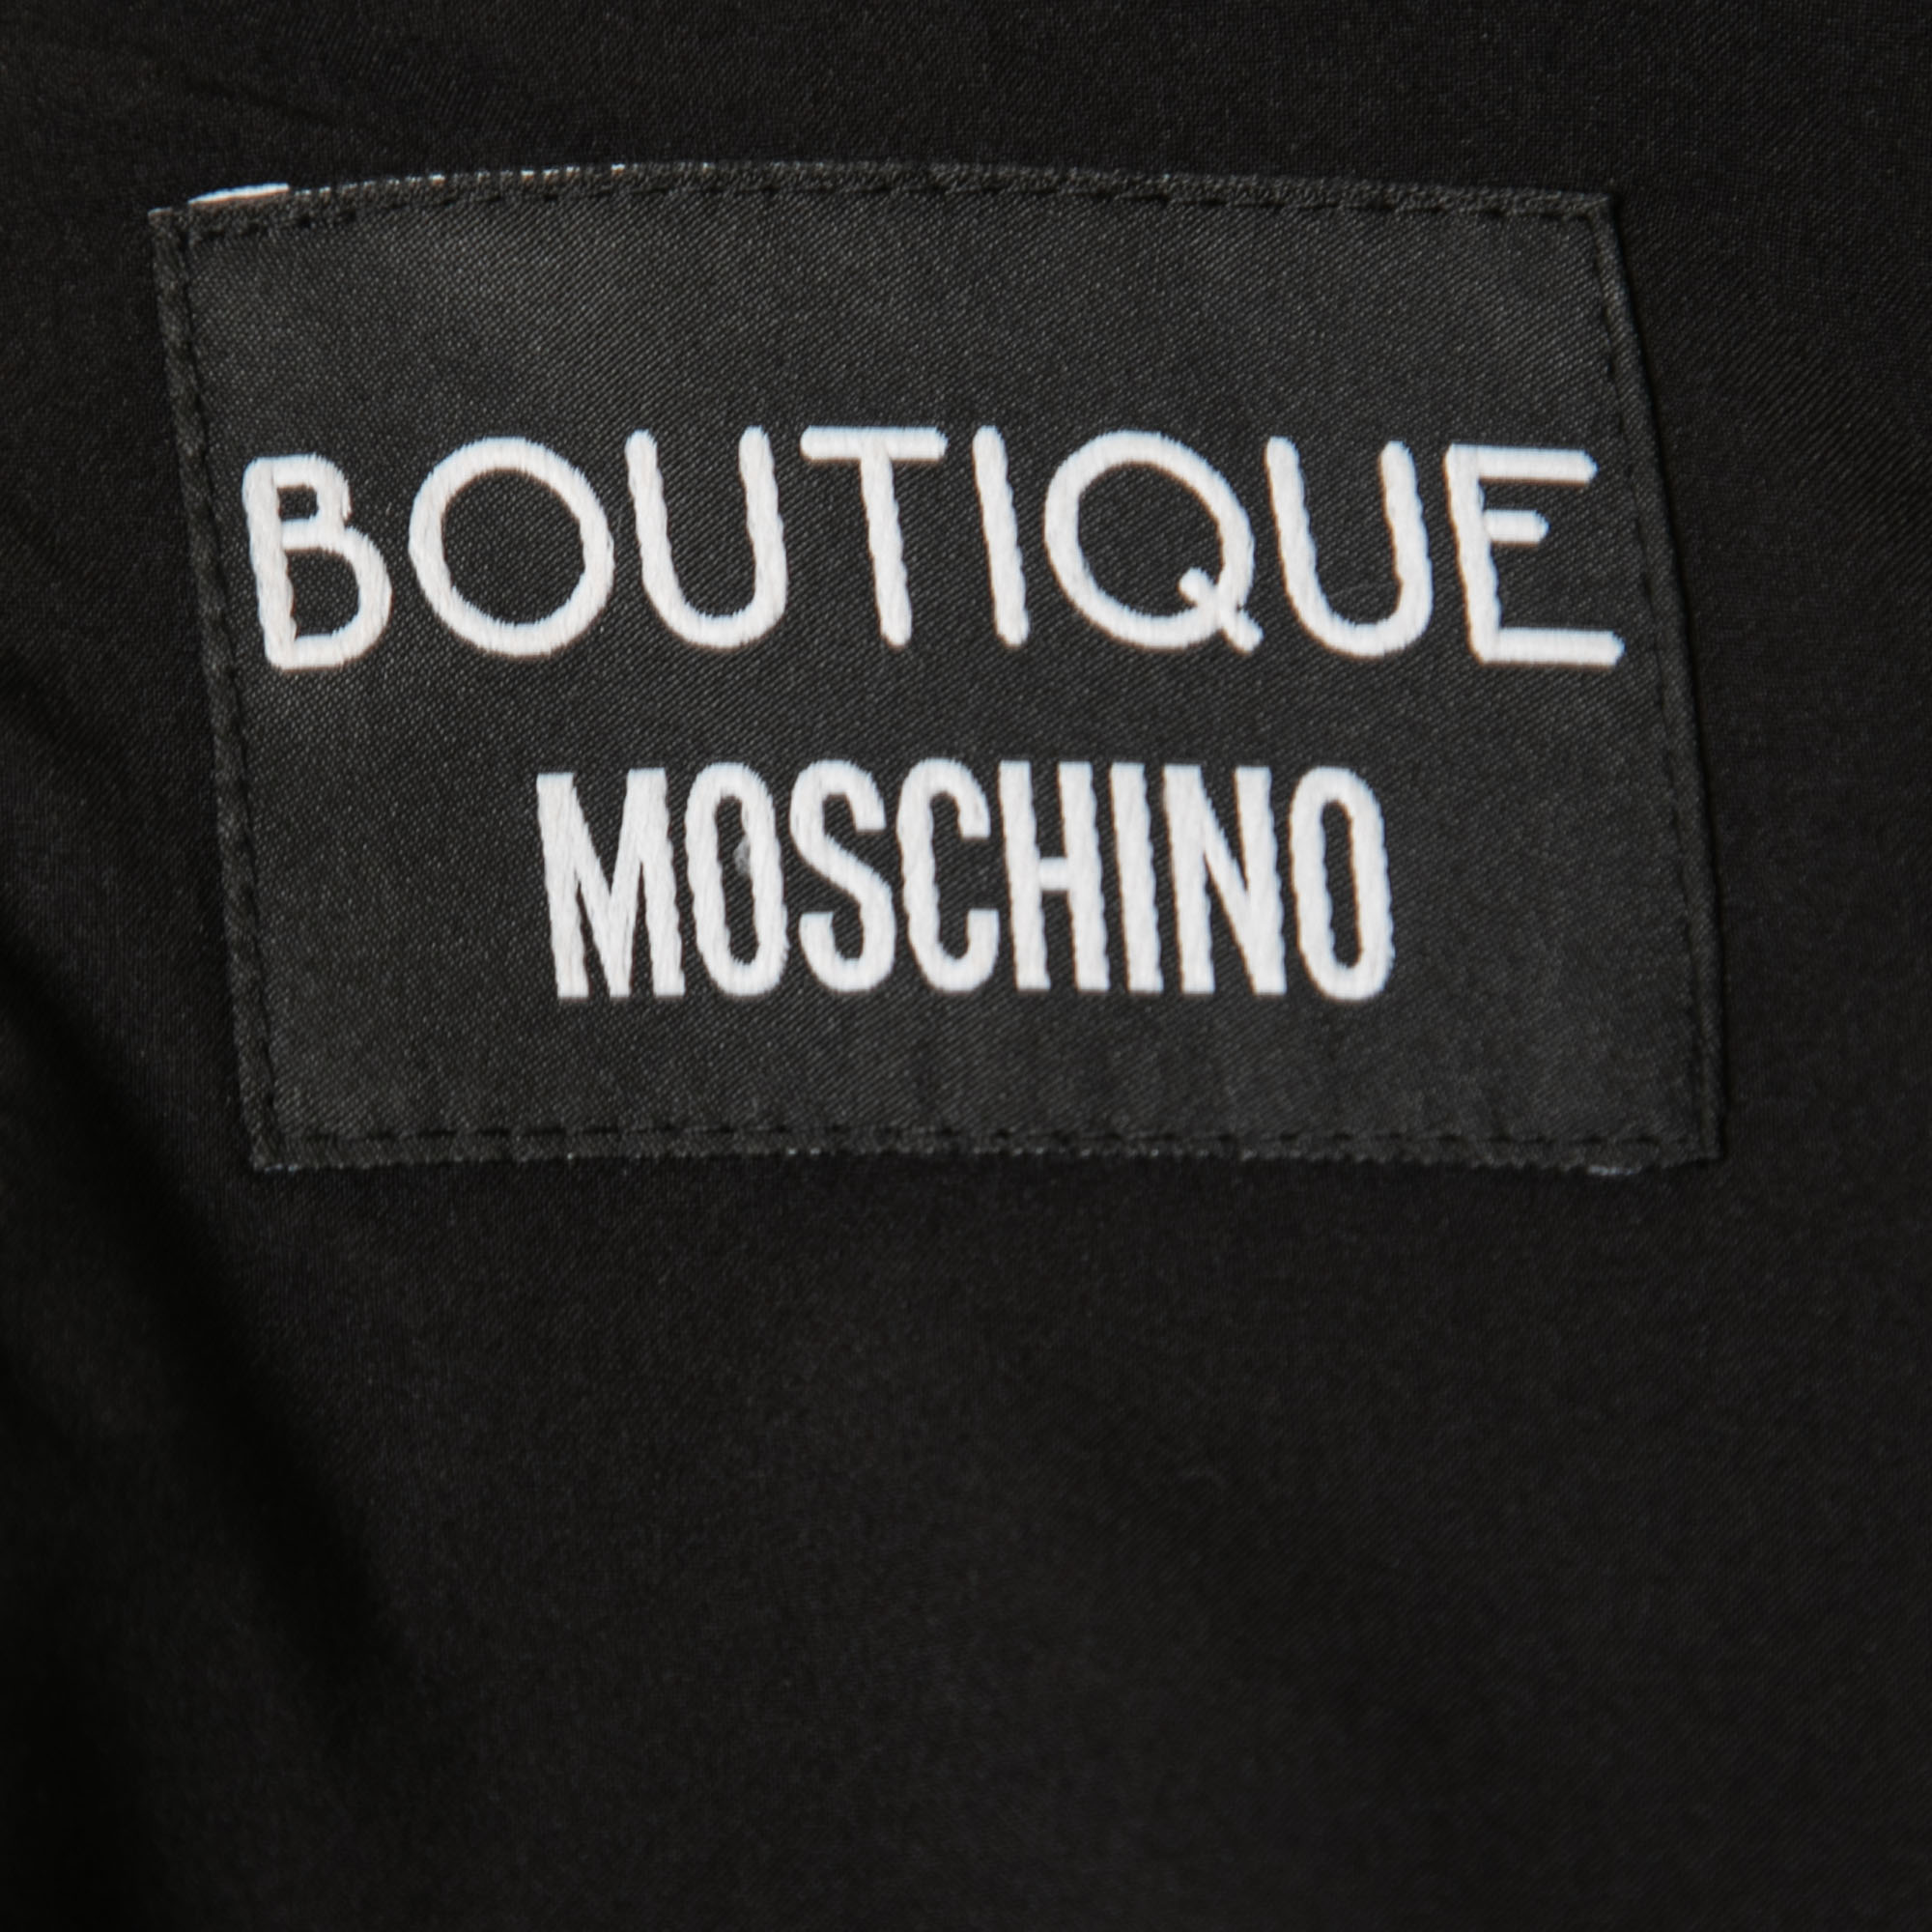 Boutique Moschino Black Multicolor Floral Print Crepe Maxi Dress S